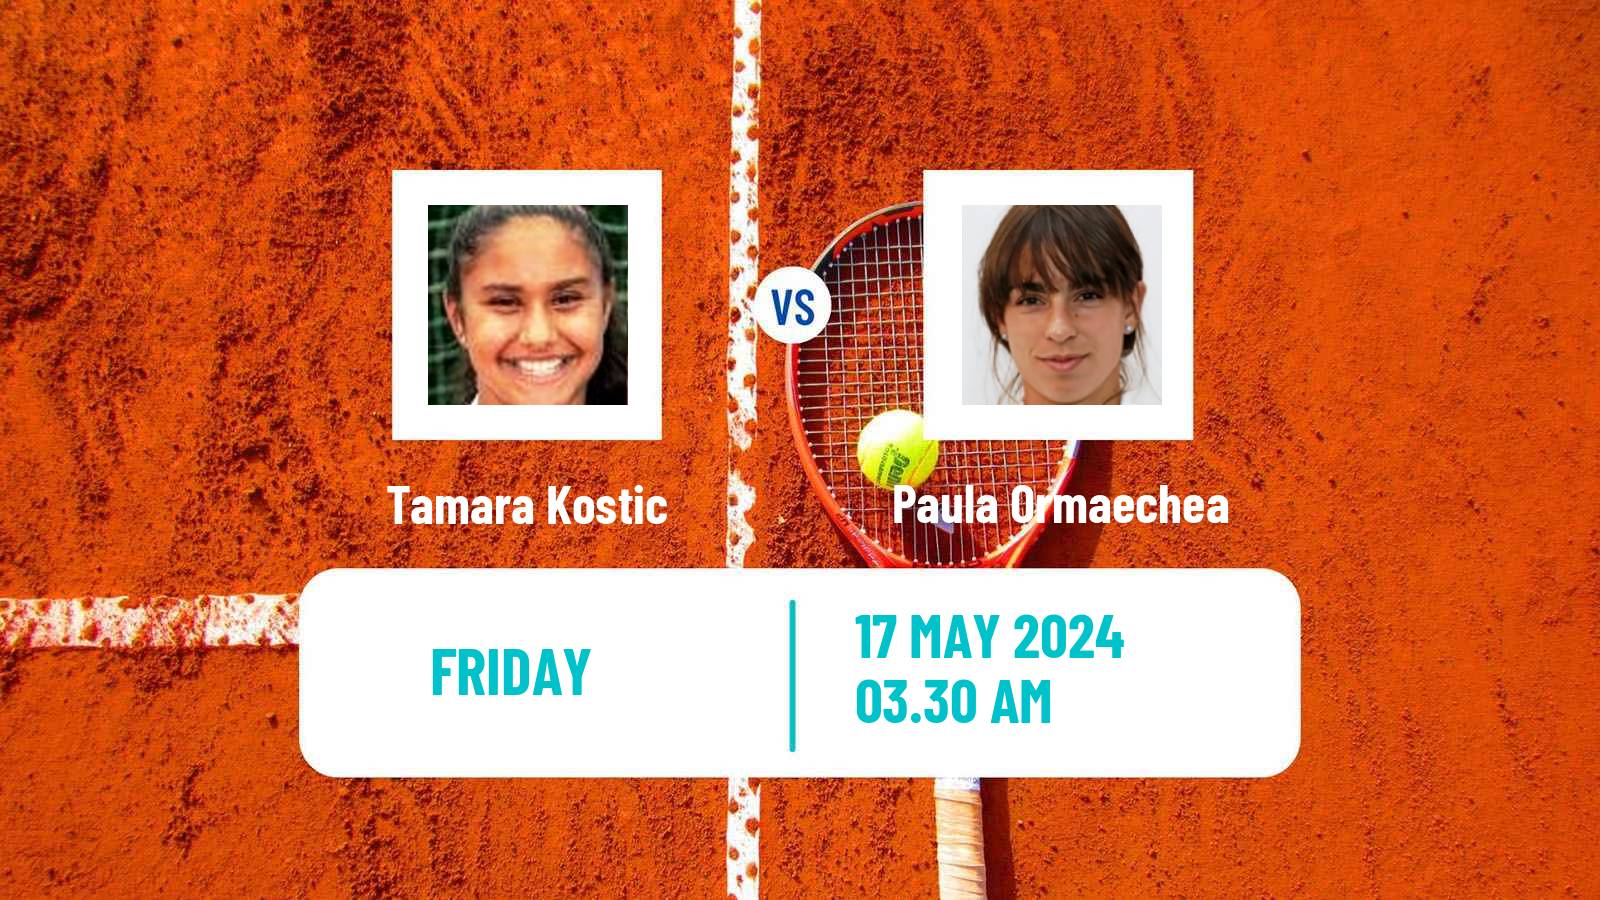 Tennis ITF W35 Villach Women Tamara Kostic - Paula Ormaechea